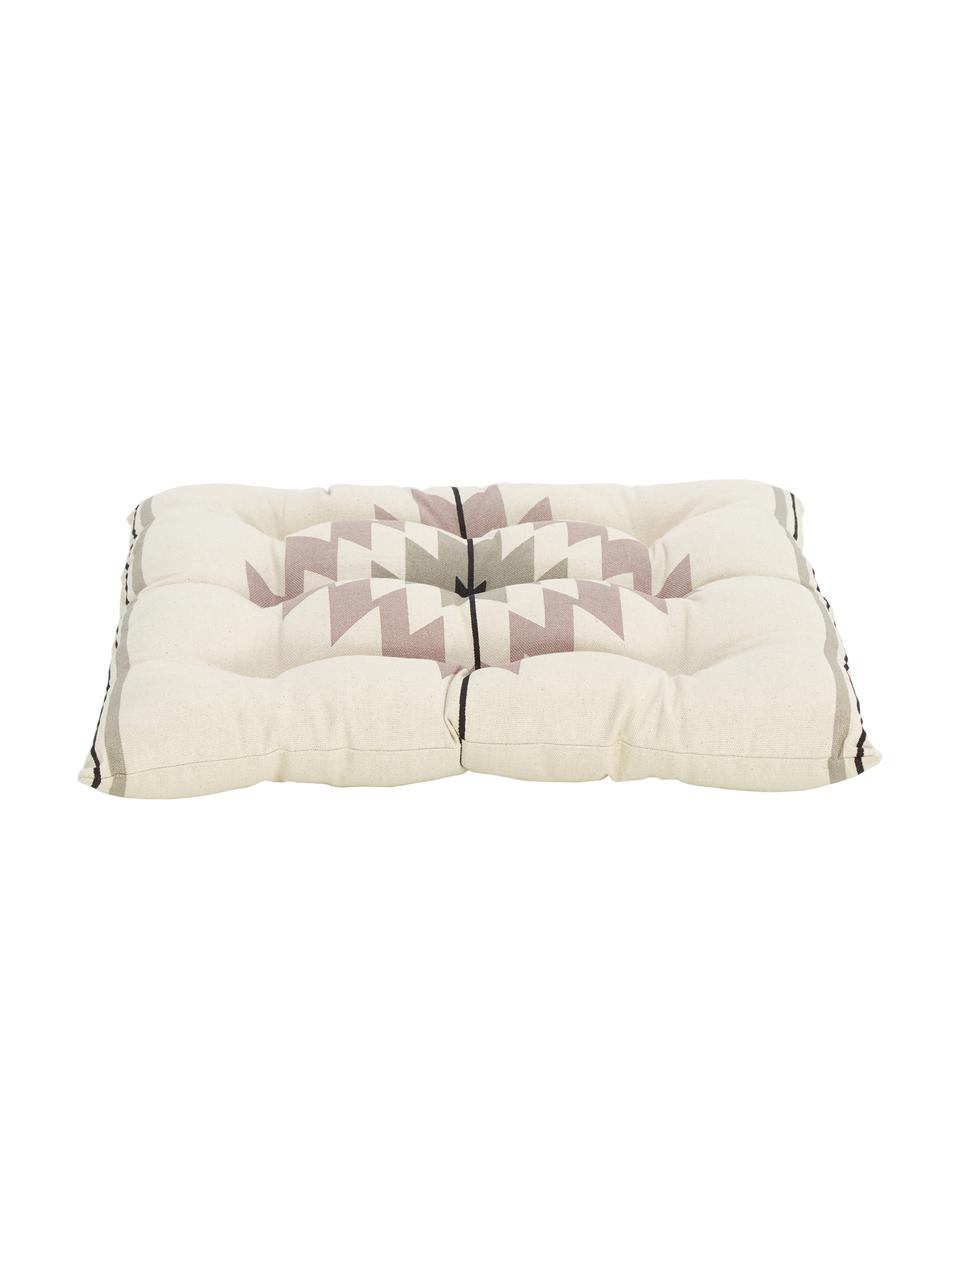 Cuscino sedia etnico Luca, Rivestimento: 100% cotone, Rosa, beige, bianco, Larg. 40 x Lung. 40 cm